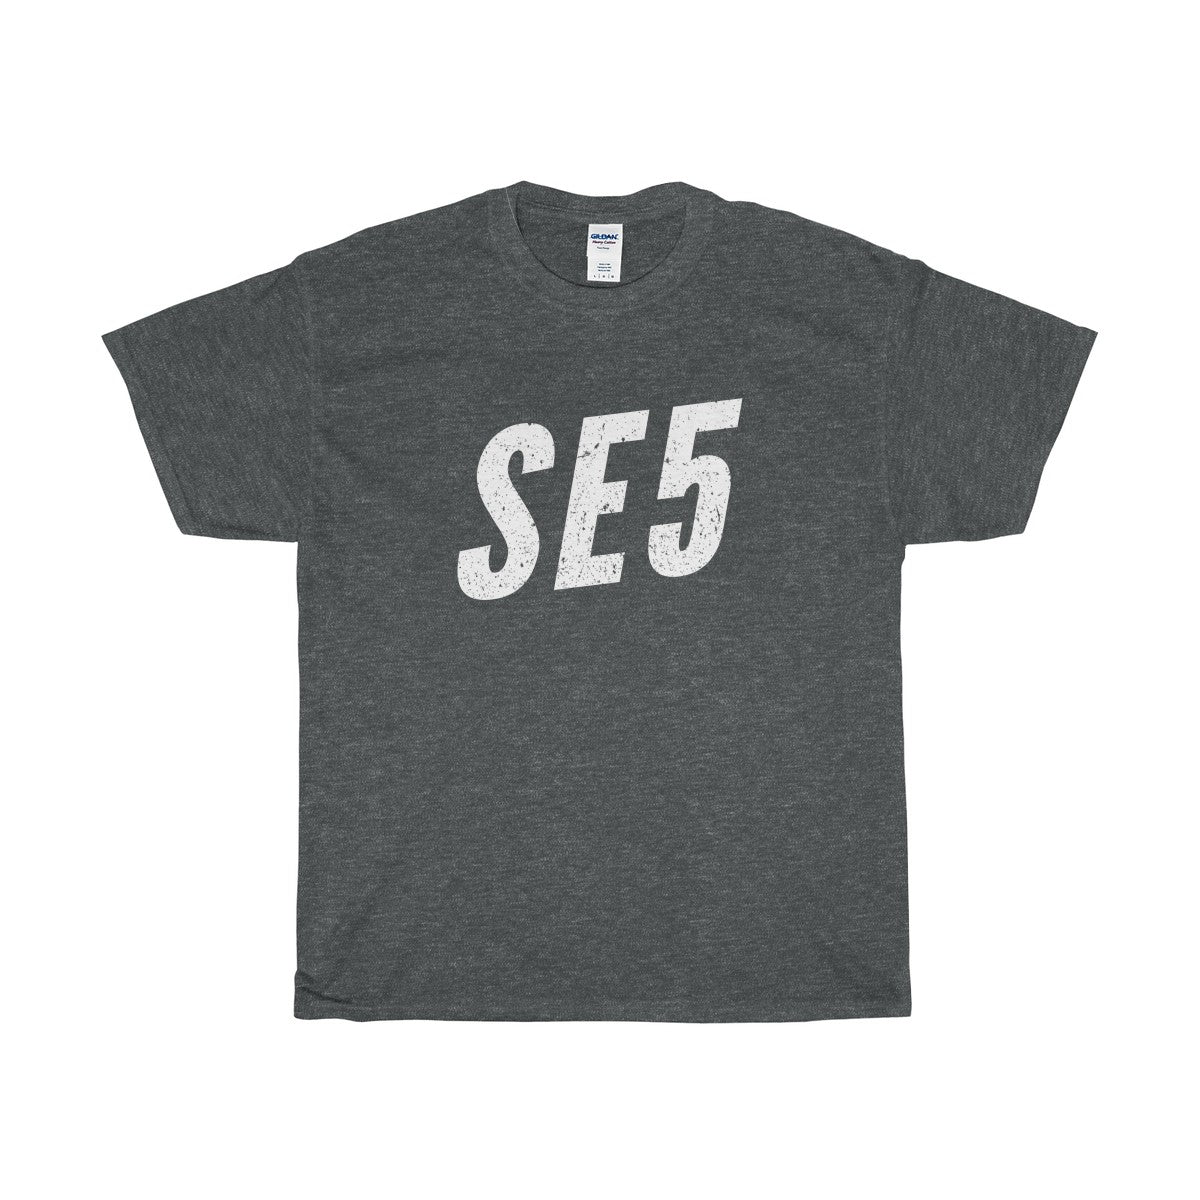 Camberwell SE5 - T-Shirt